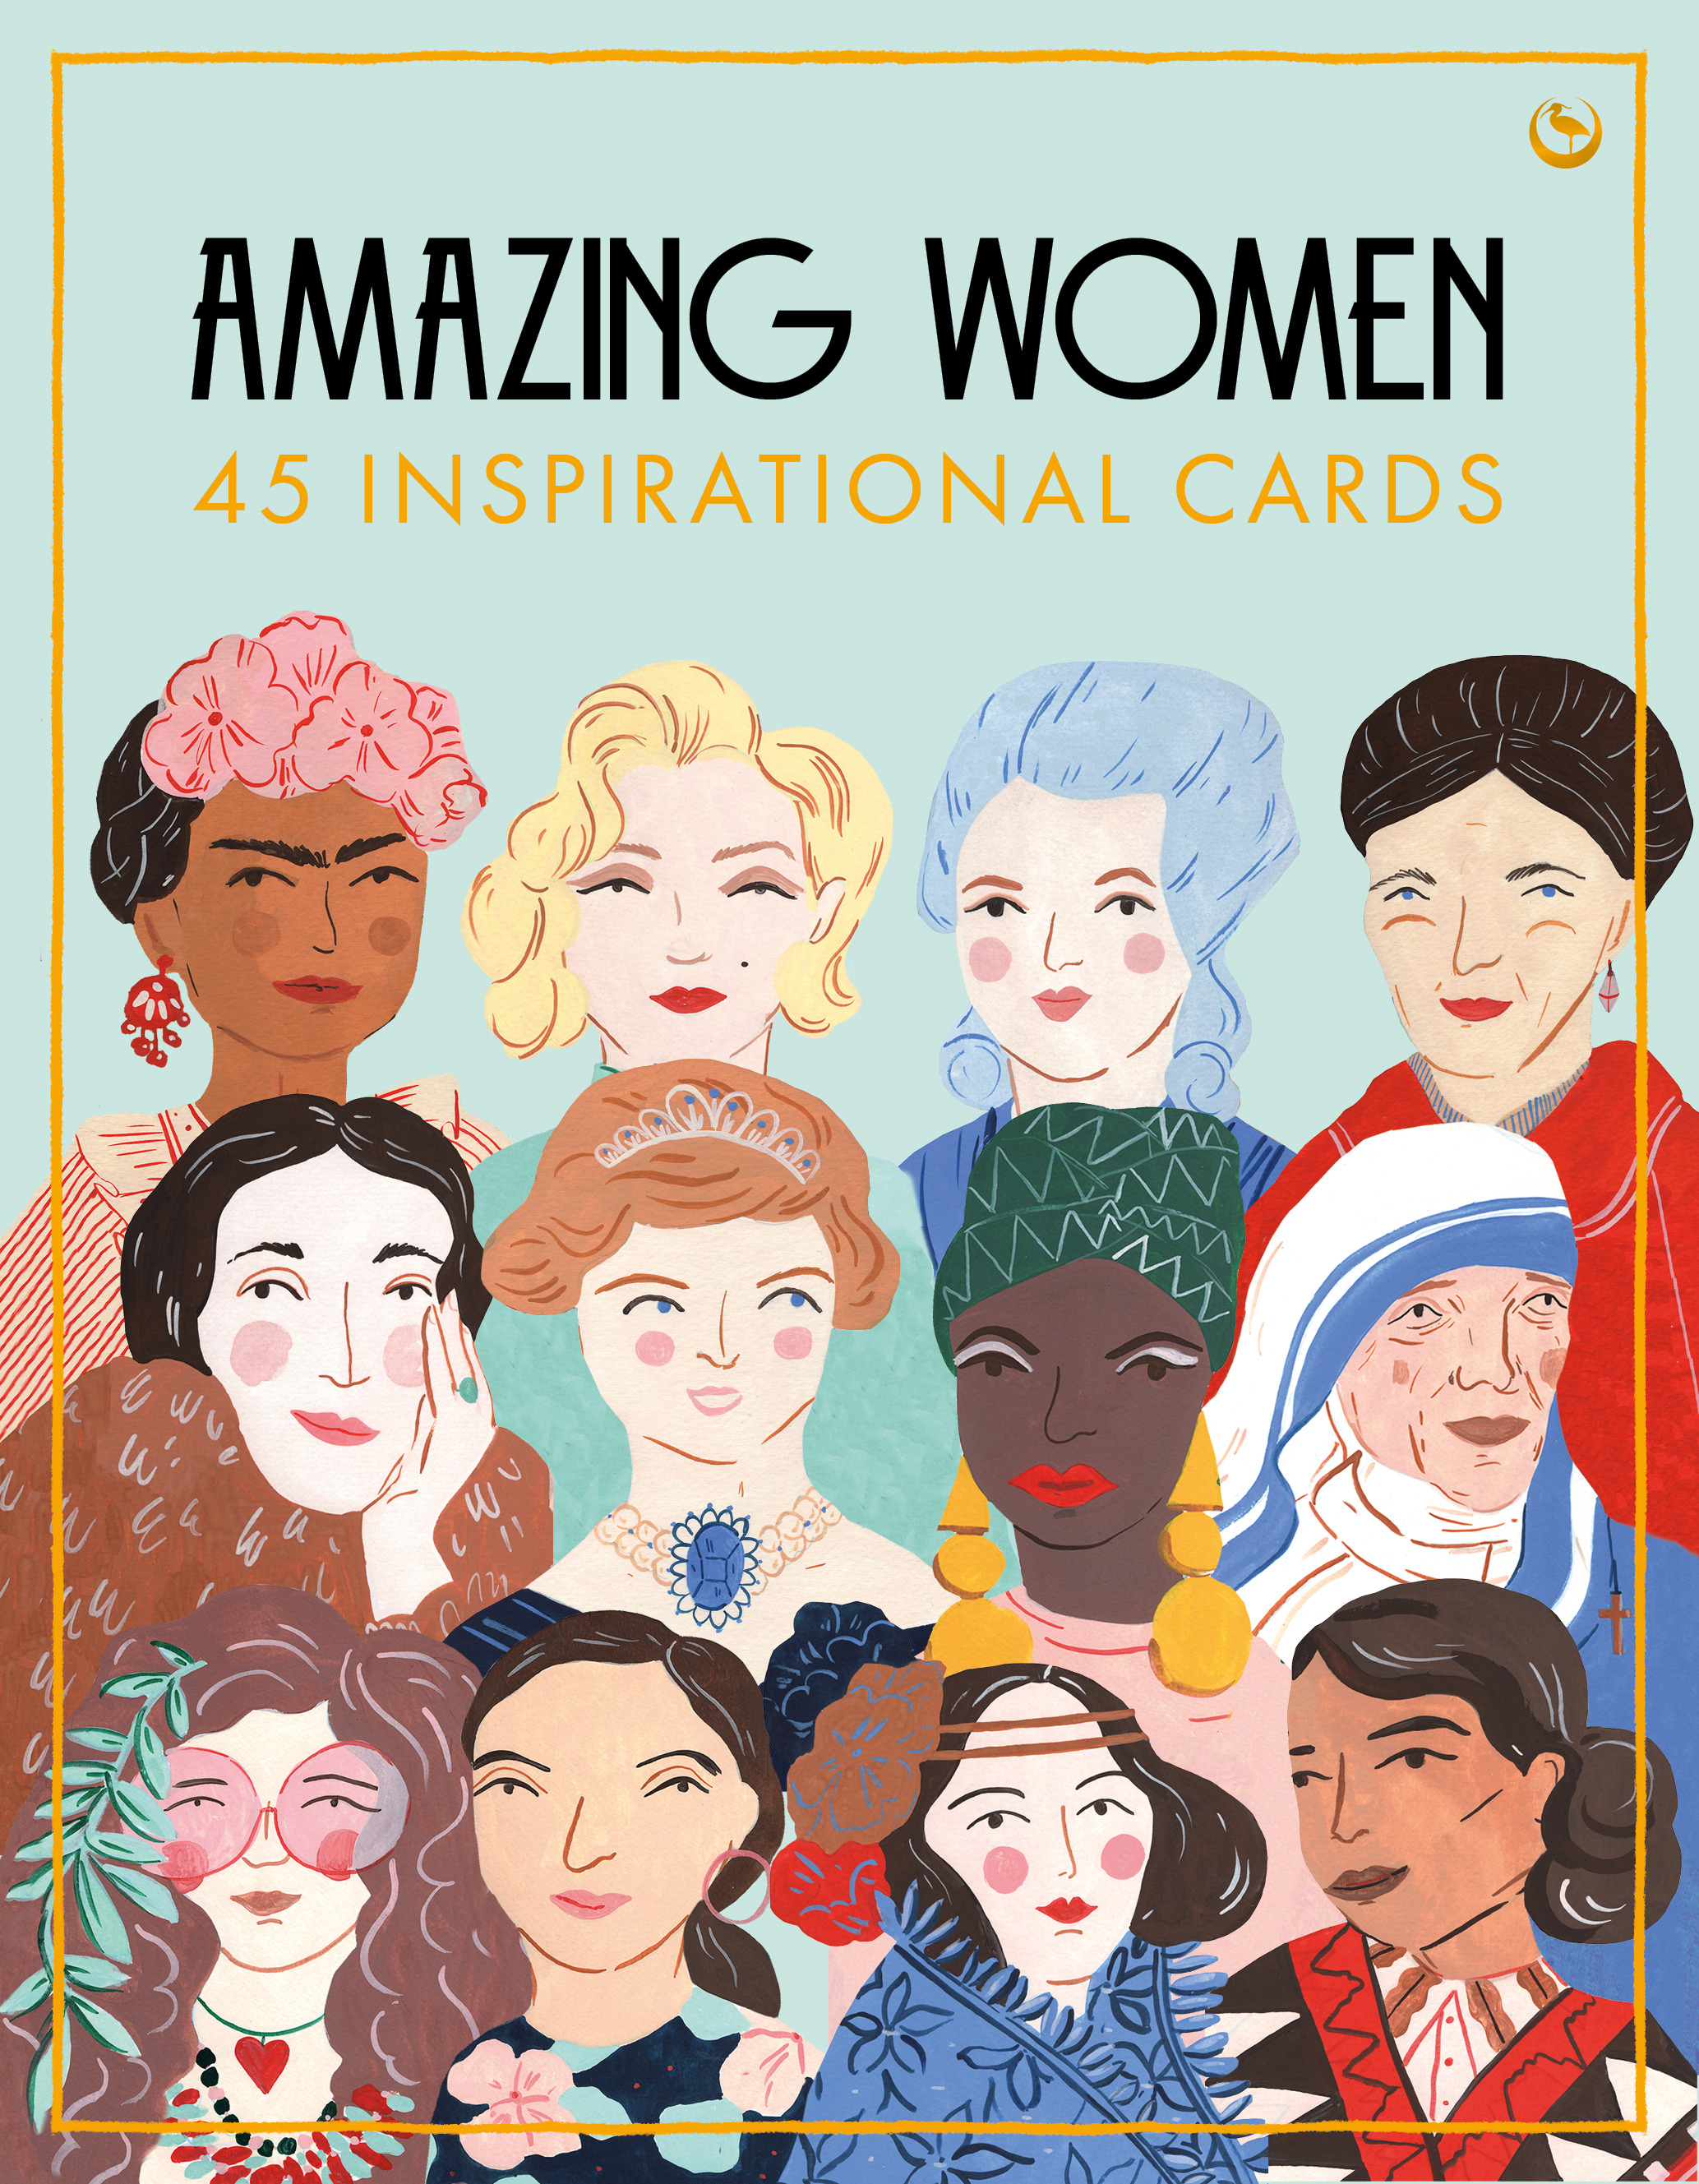 AMAZING WOMEN CARDS, by PARRA, MARA